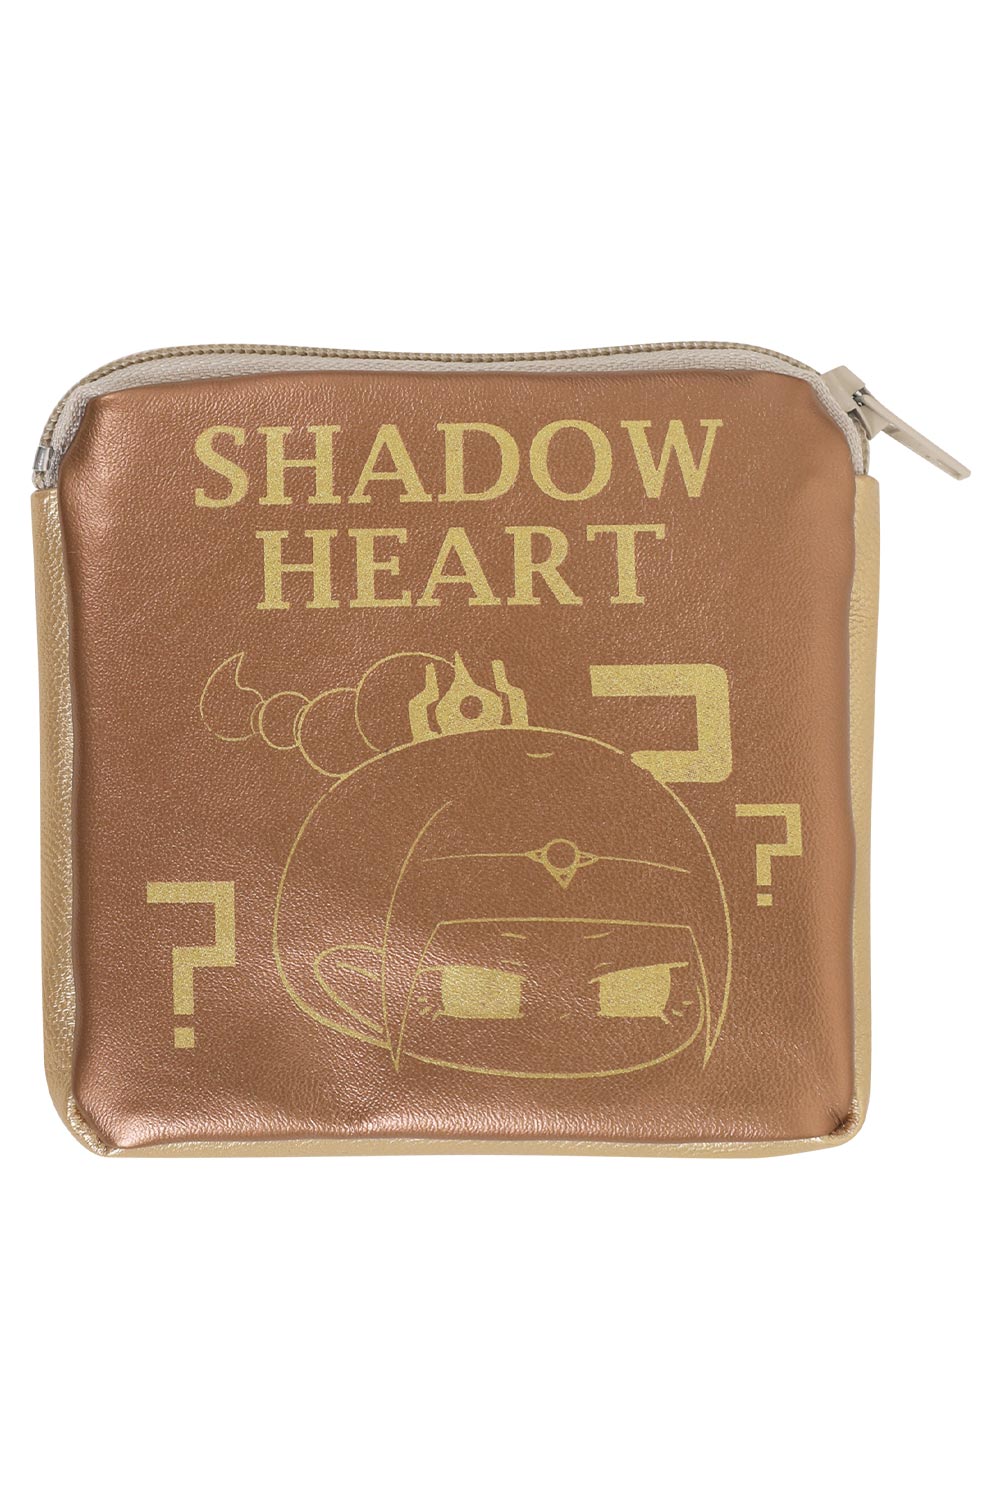 Game Baldur's Gate Shadowheart Cosplay Portable Lether Purse Halloween Costume Accessories Original Design